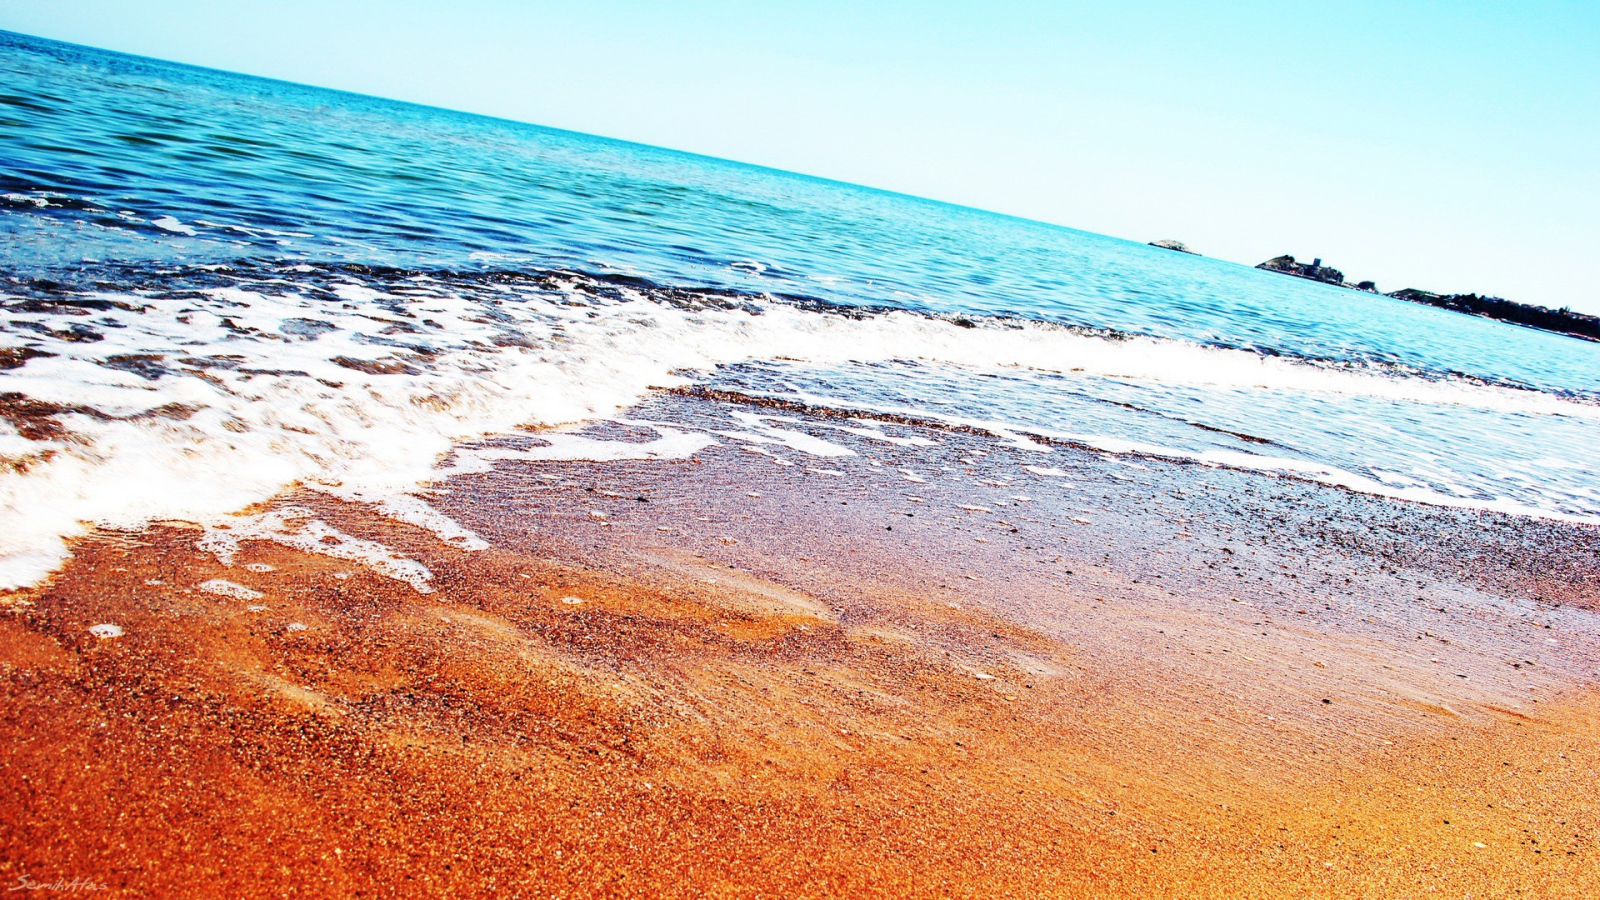 Calm blue sea and sandy beach